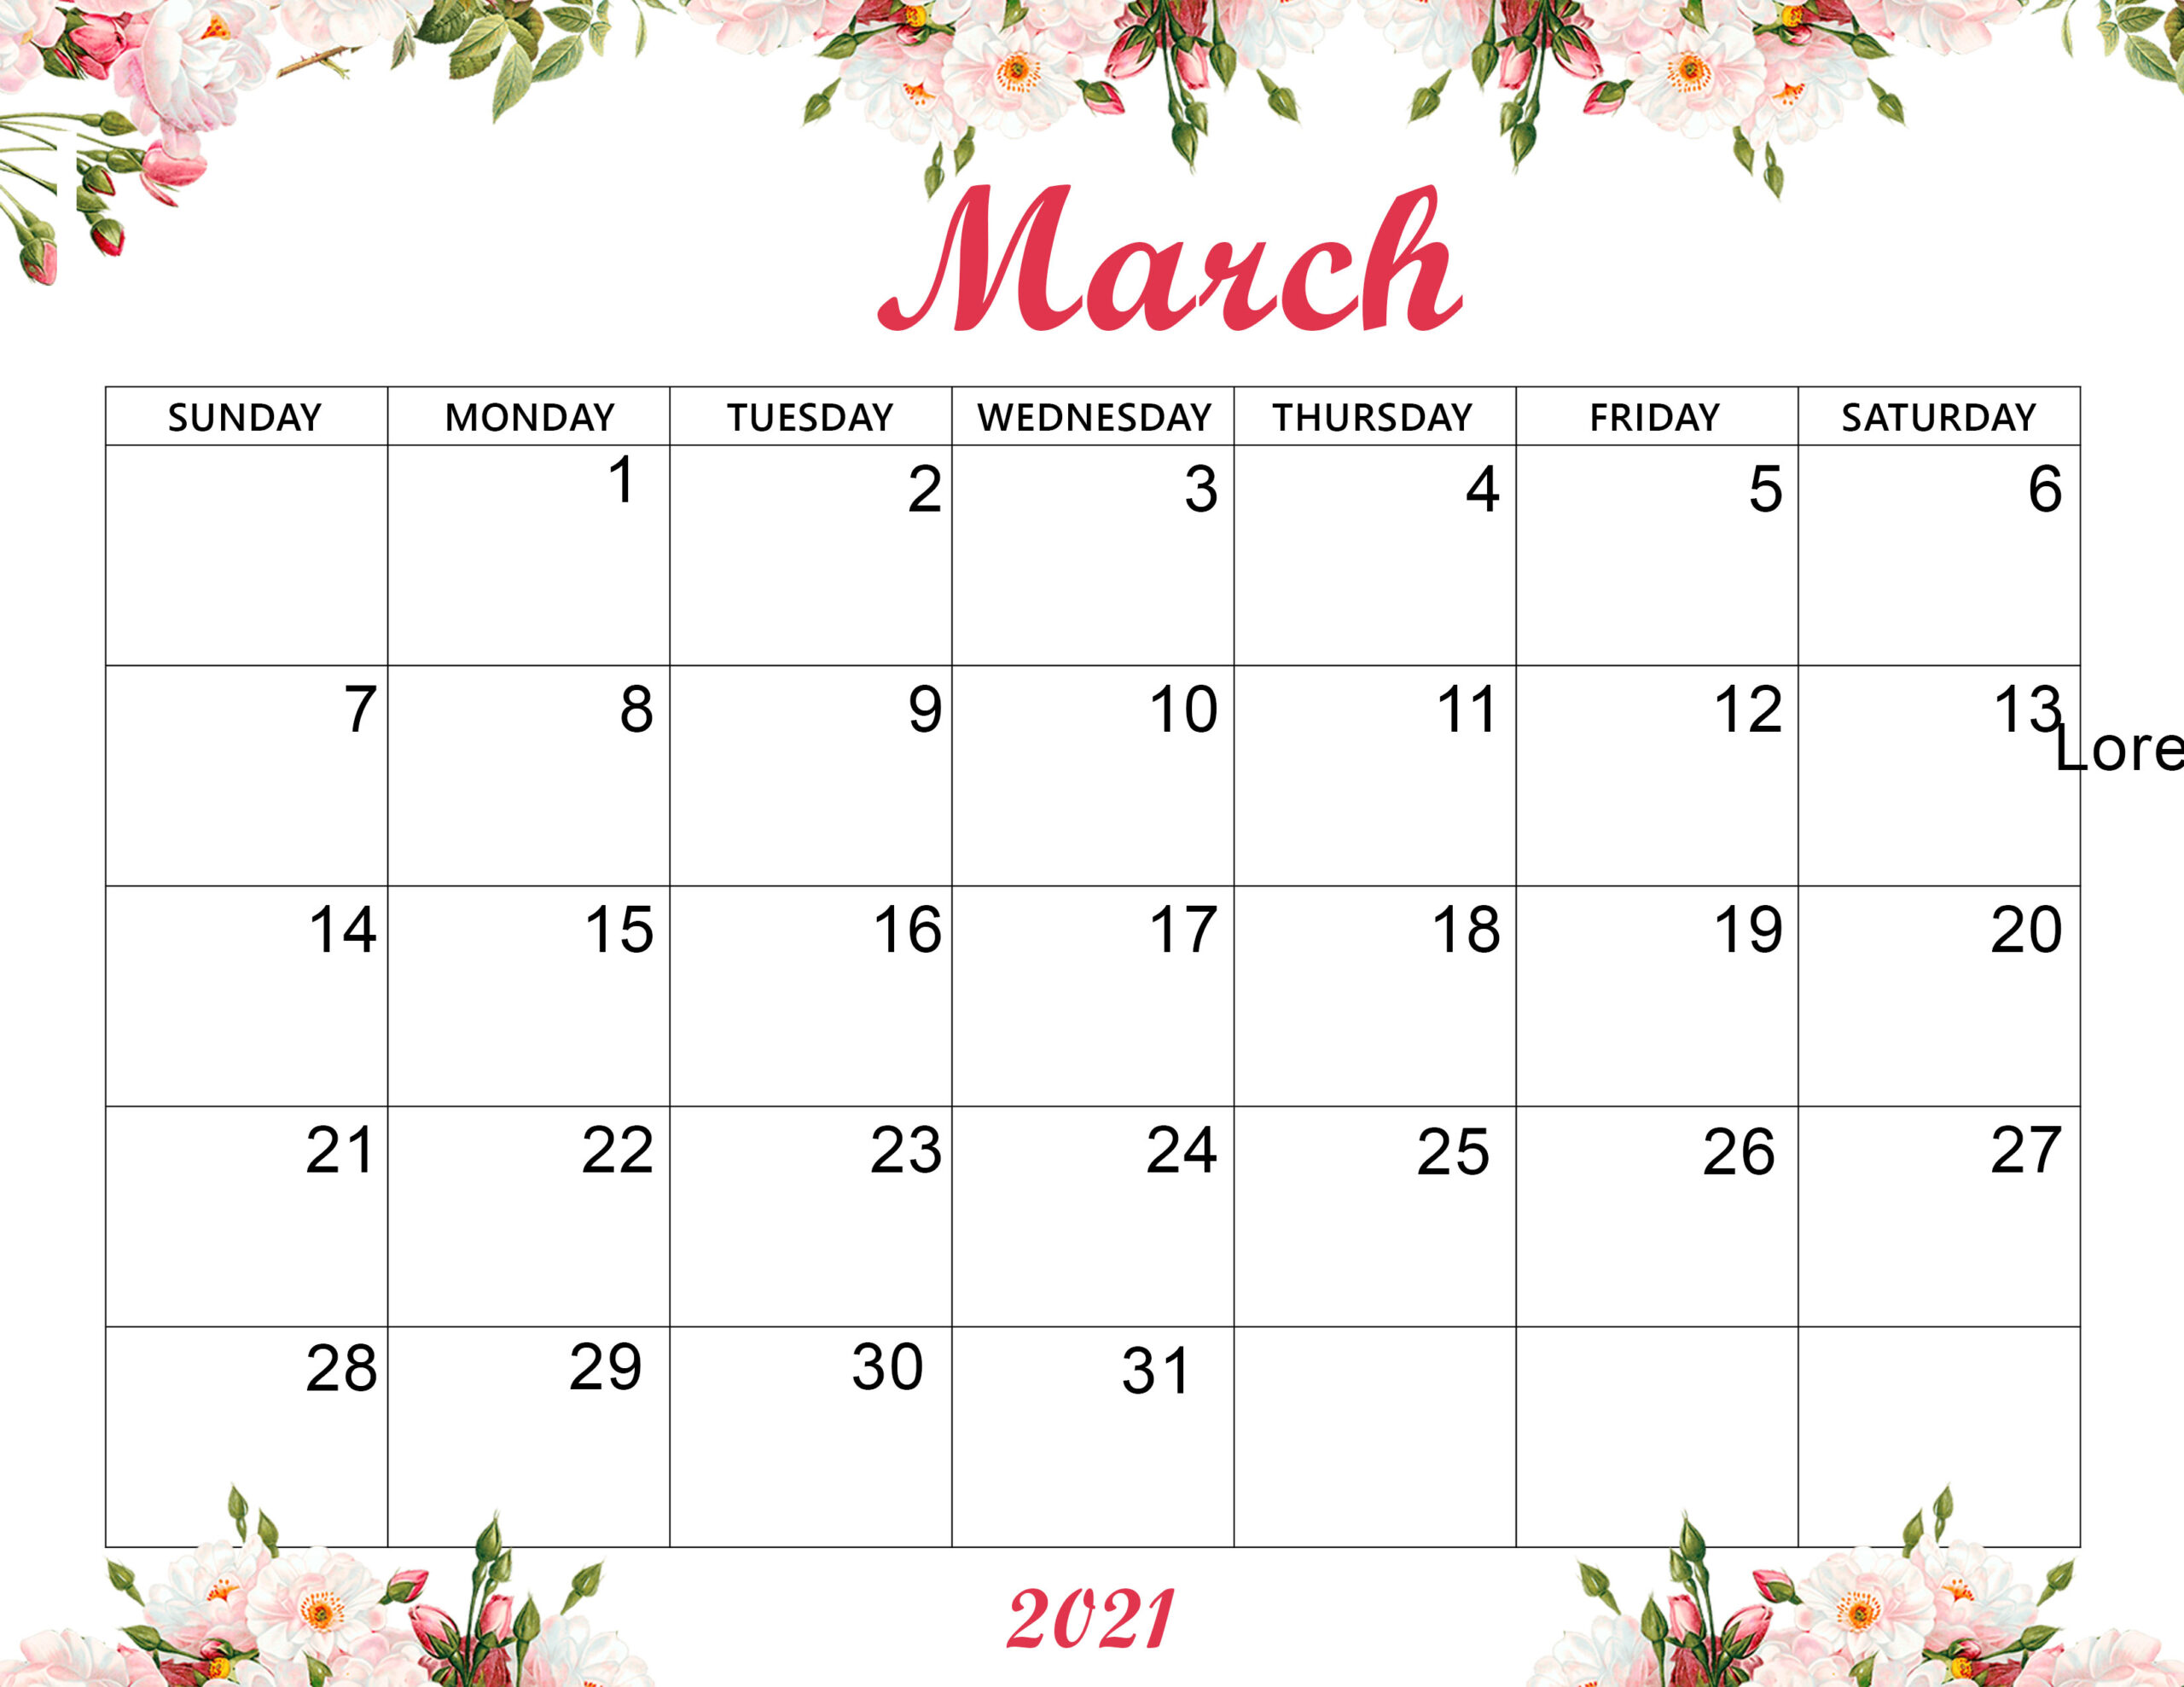 🔥 Download iPhone March Calendar Wallpaper by zacharymckenzie March